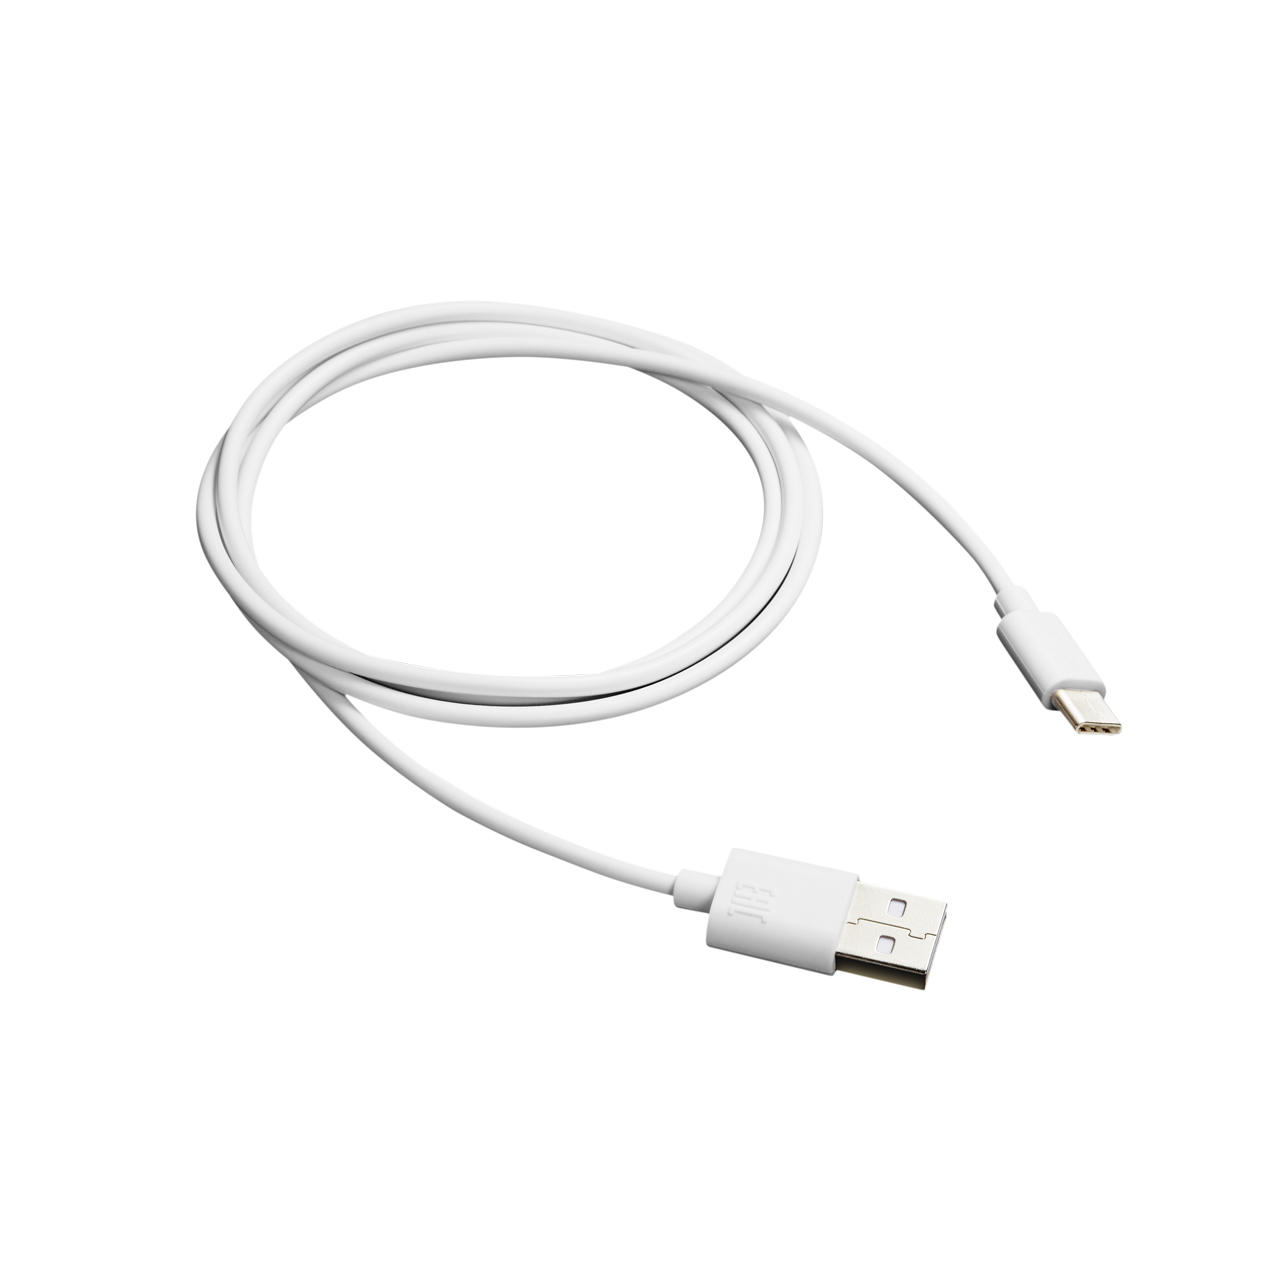 Photos - Cable (video, audio, USB) Canyon CNE-USBC1W USB cable 1 m USB 2.0 USB C USB A White 